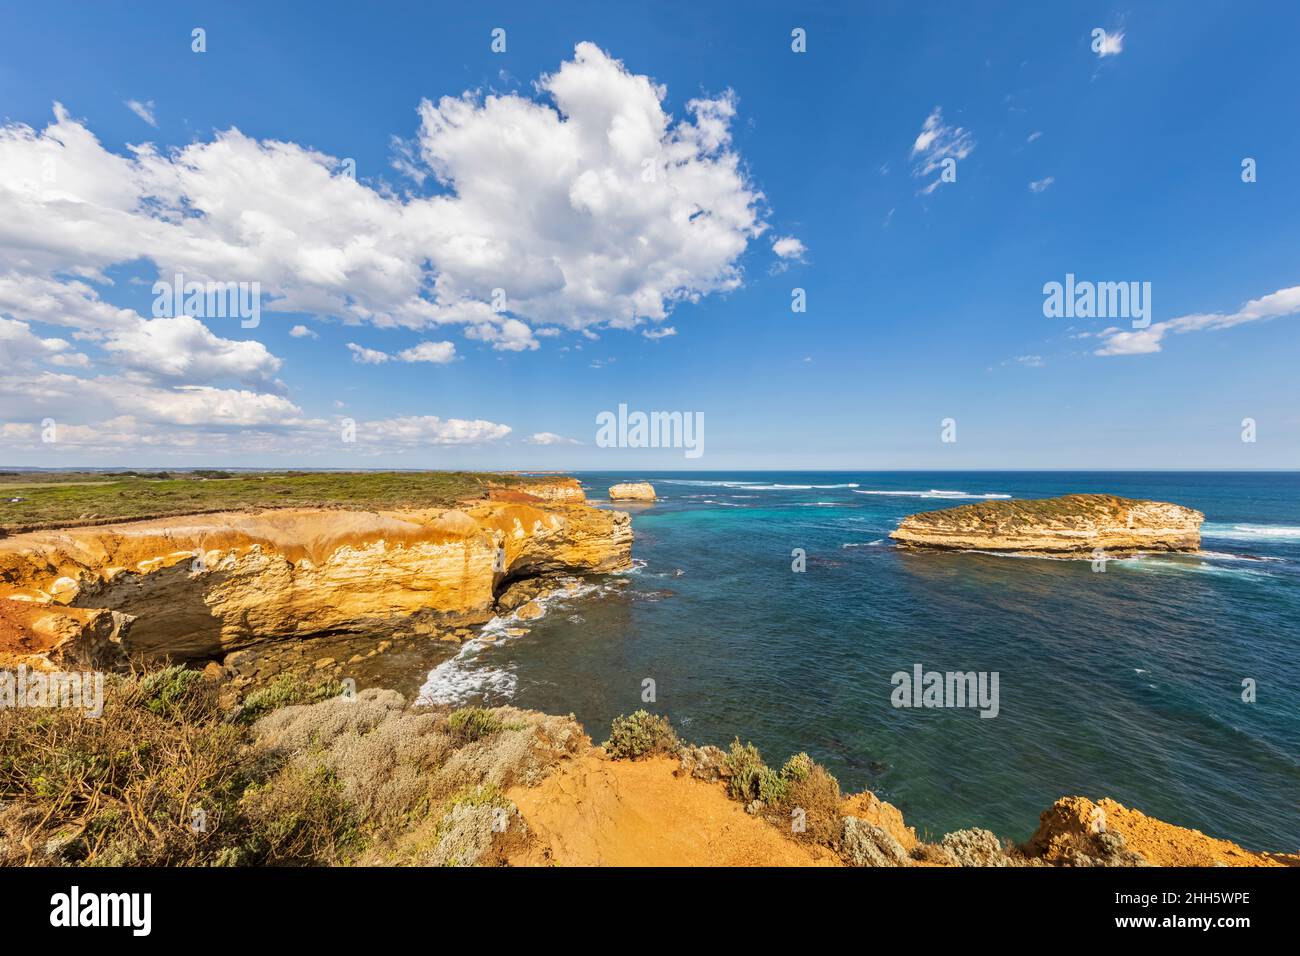 Australia, Victoria, Summer clouds over coastal landscape of Bay of Islands Stock Photo